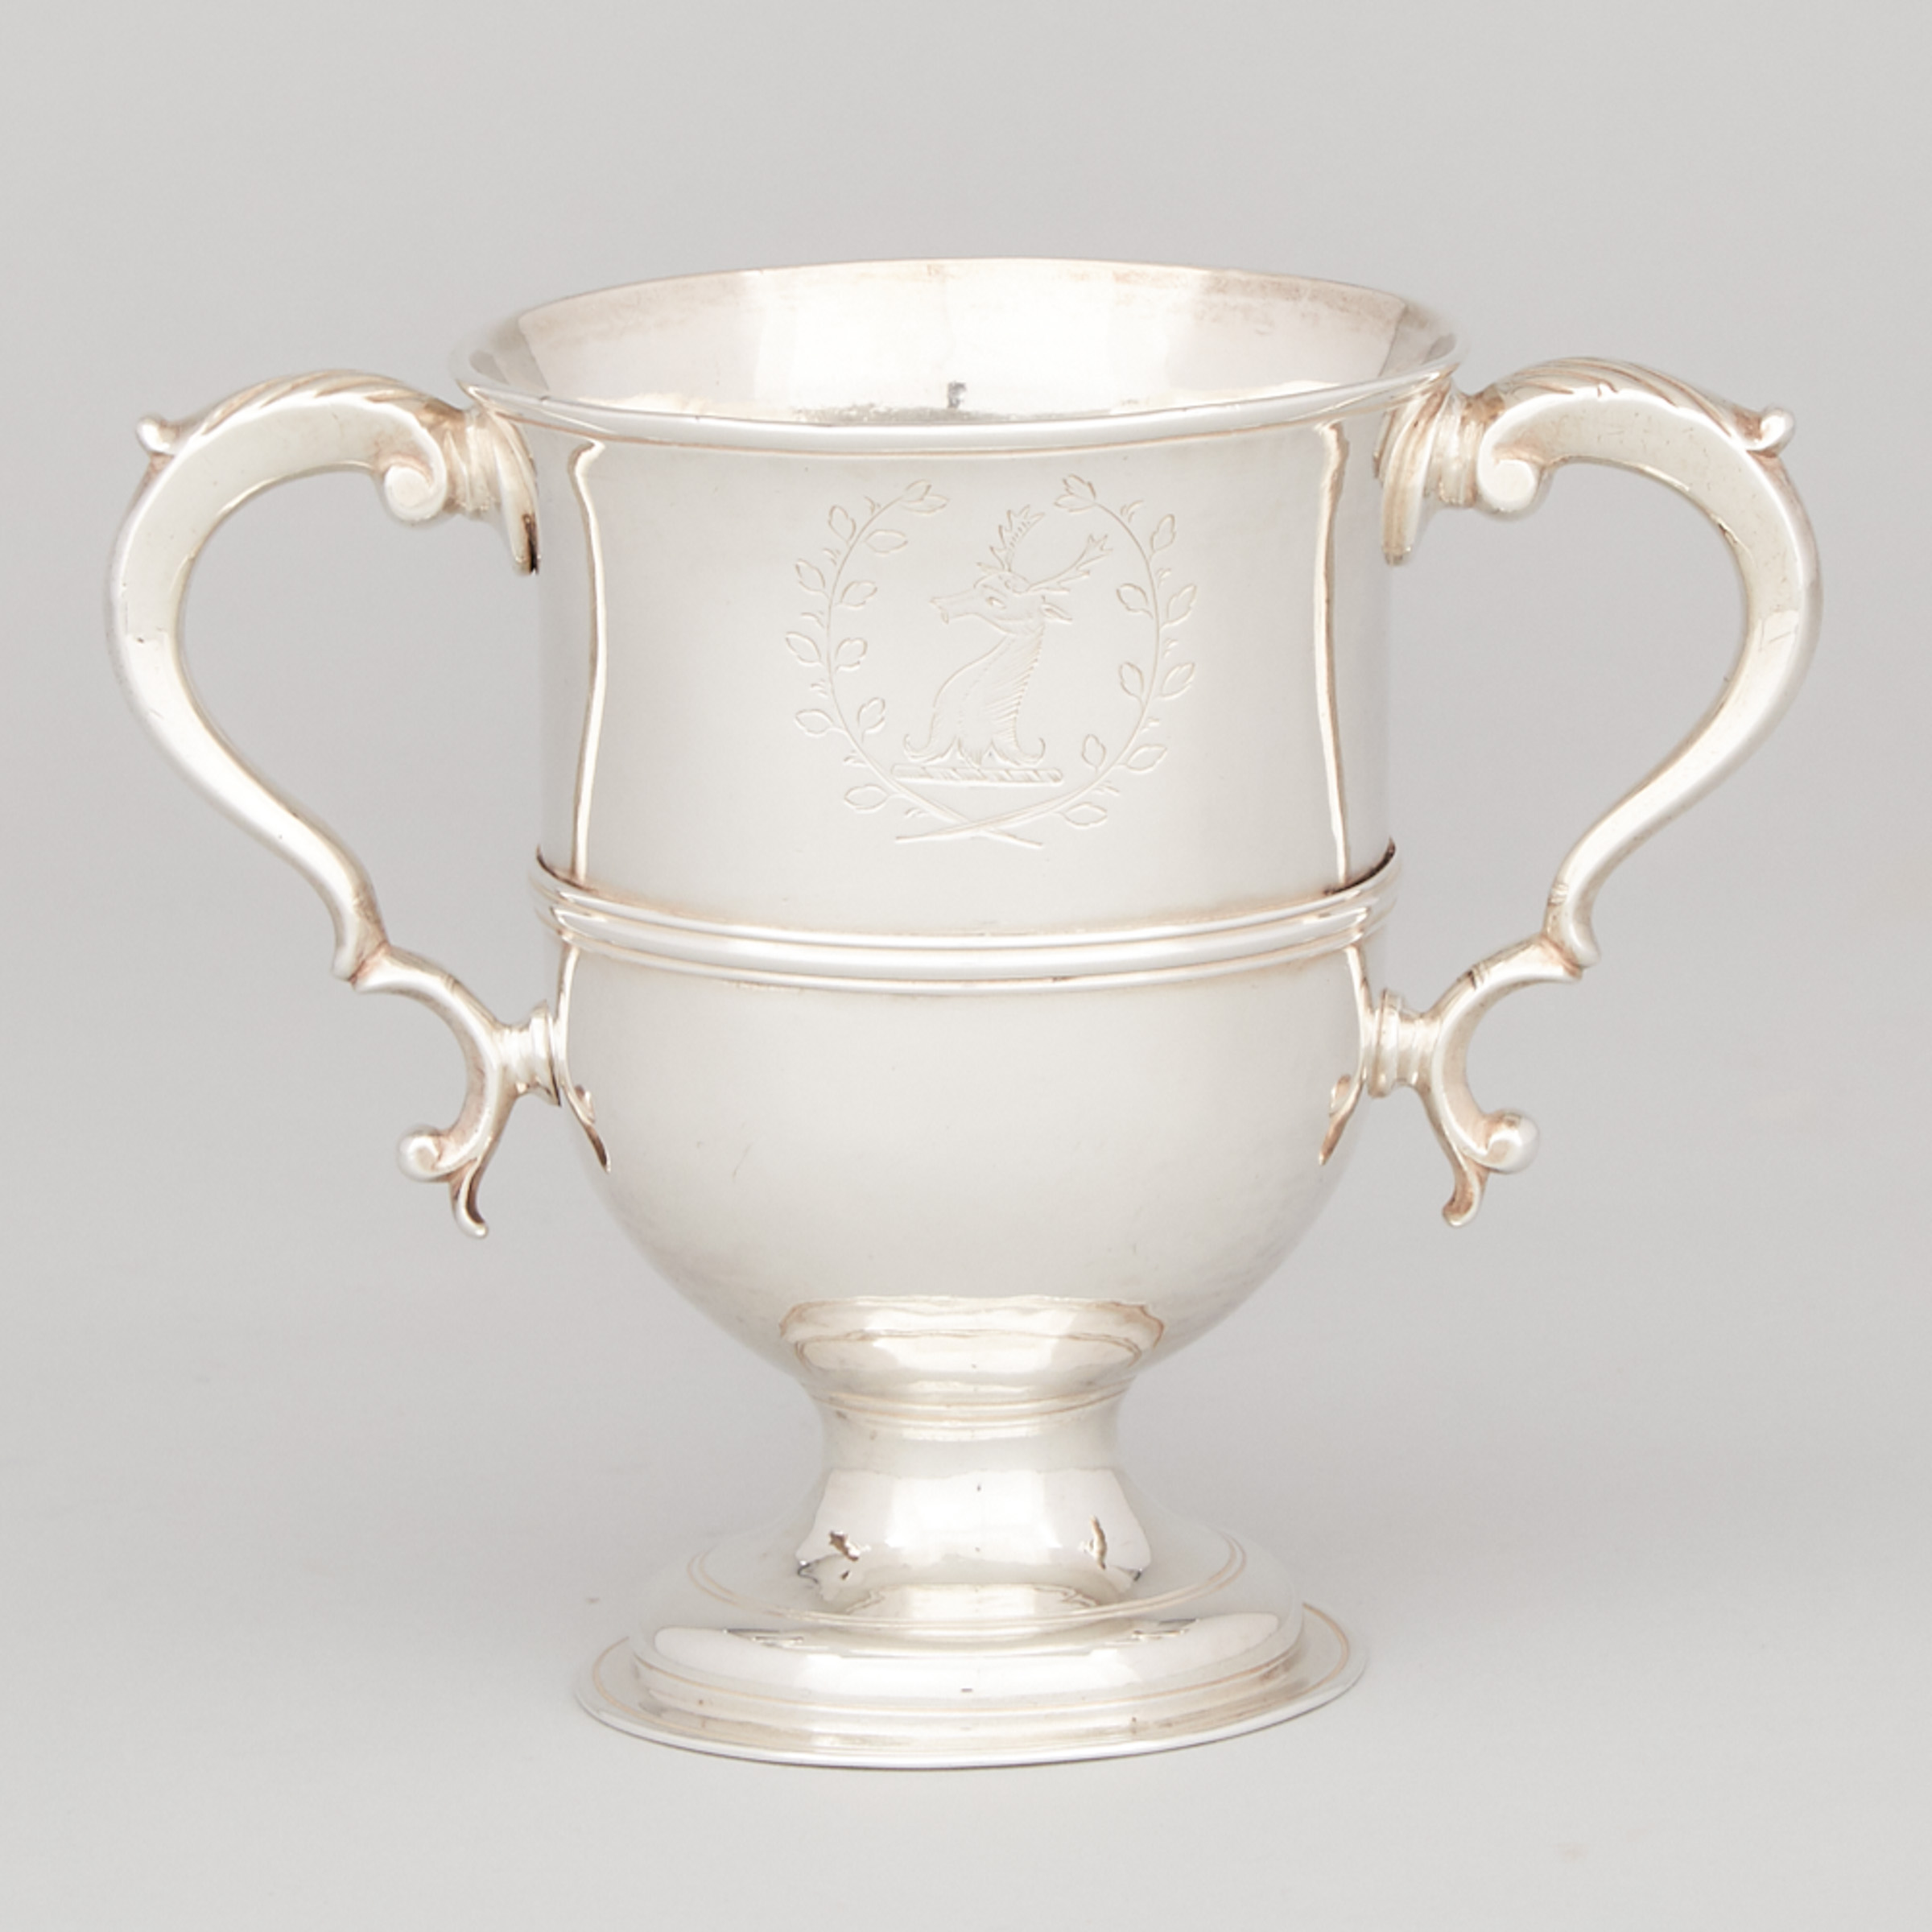 George III Silver Two-Handled Cup, John King, London, 1773